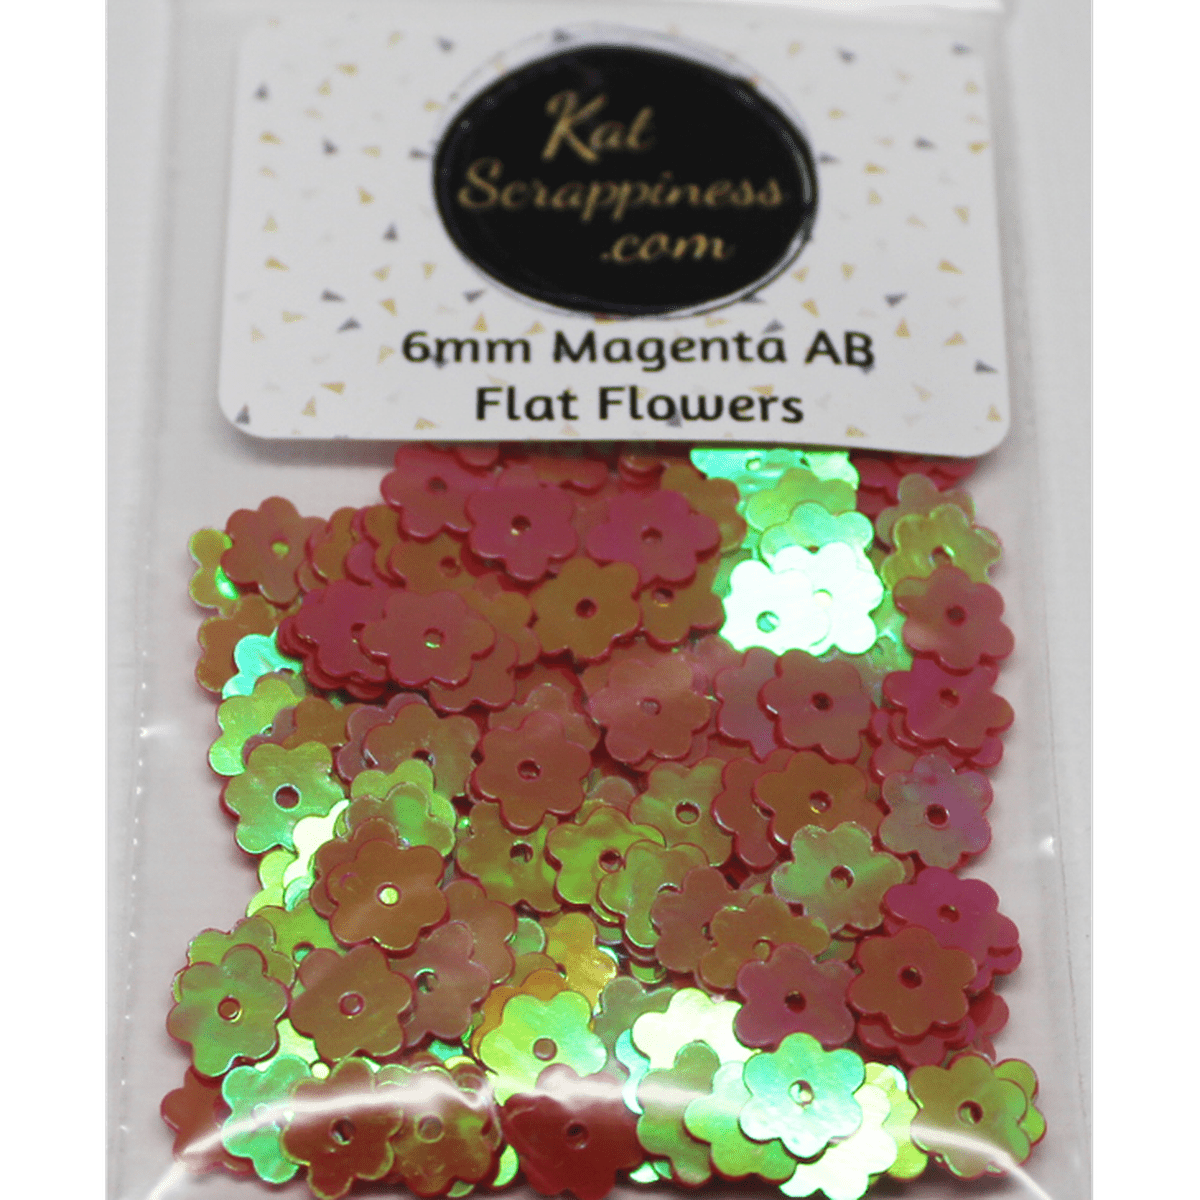 6mm Magenta AB Flat Flower Sequins Shaker Card Fillers - Kat Scrappiness